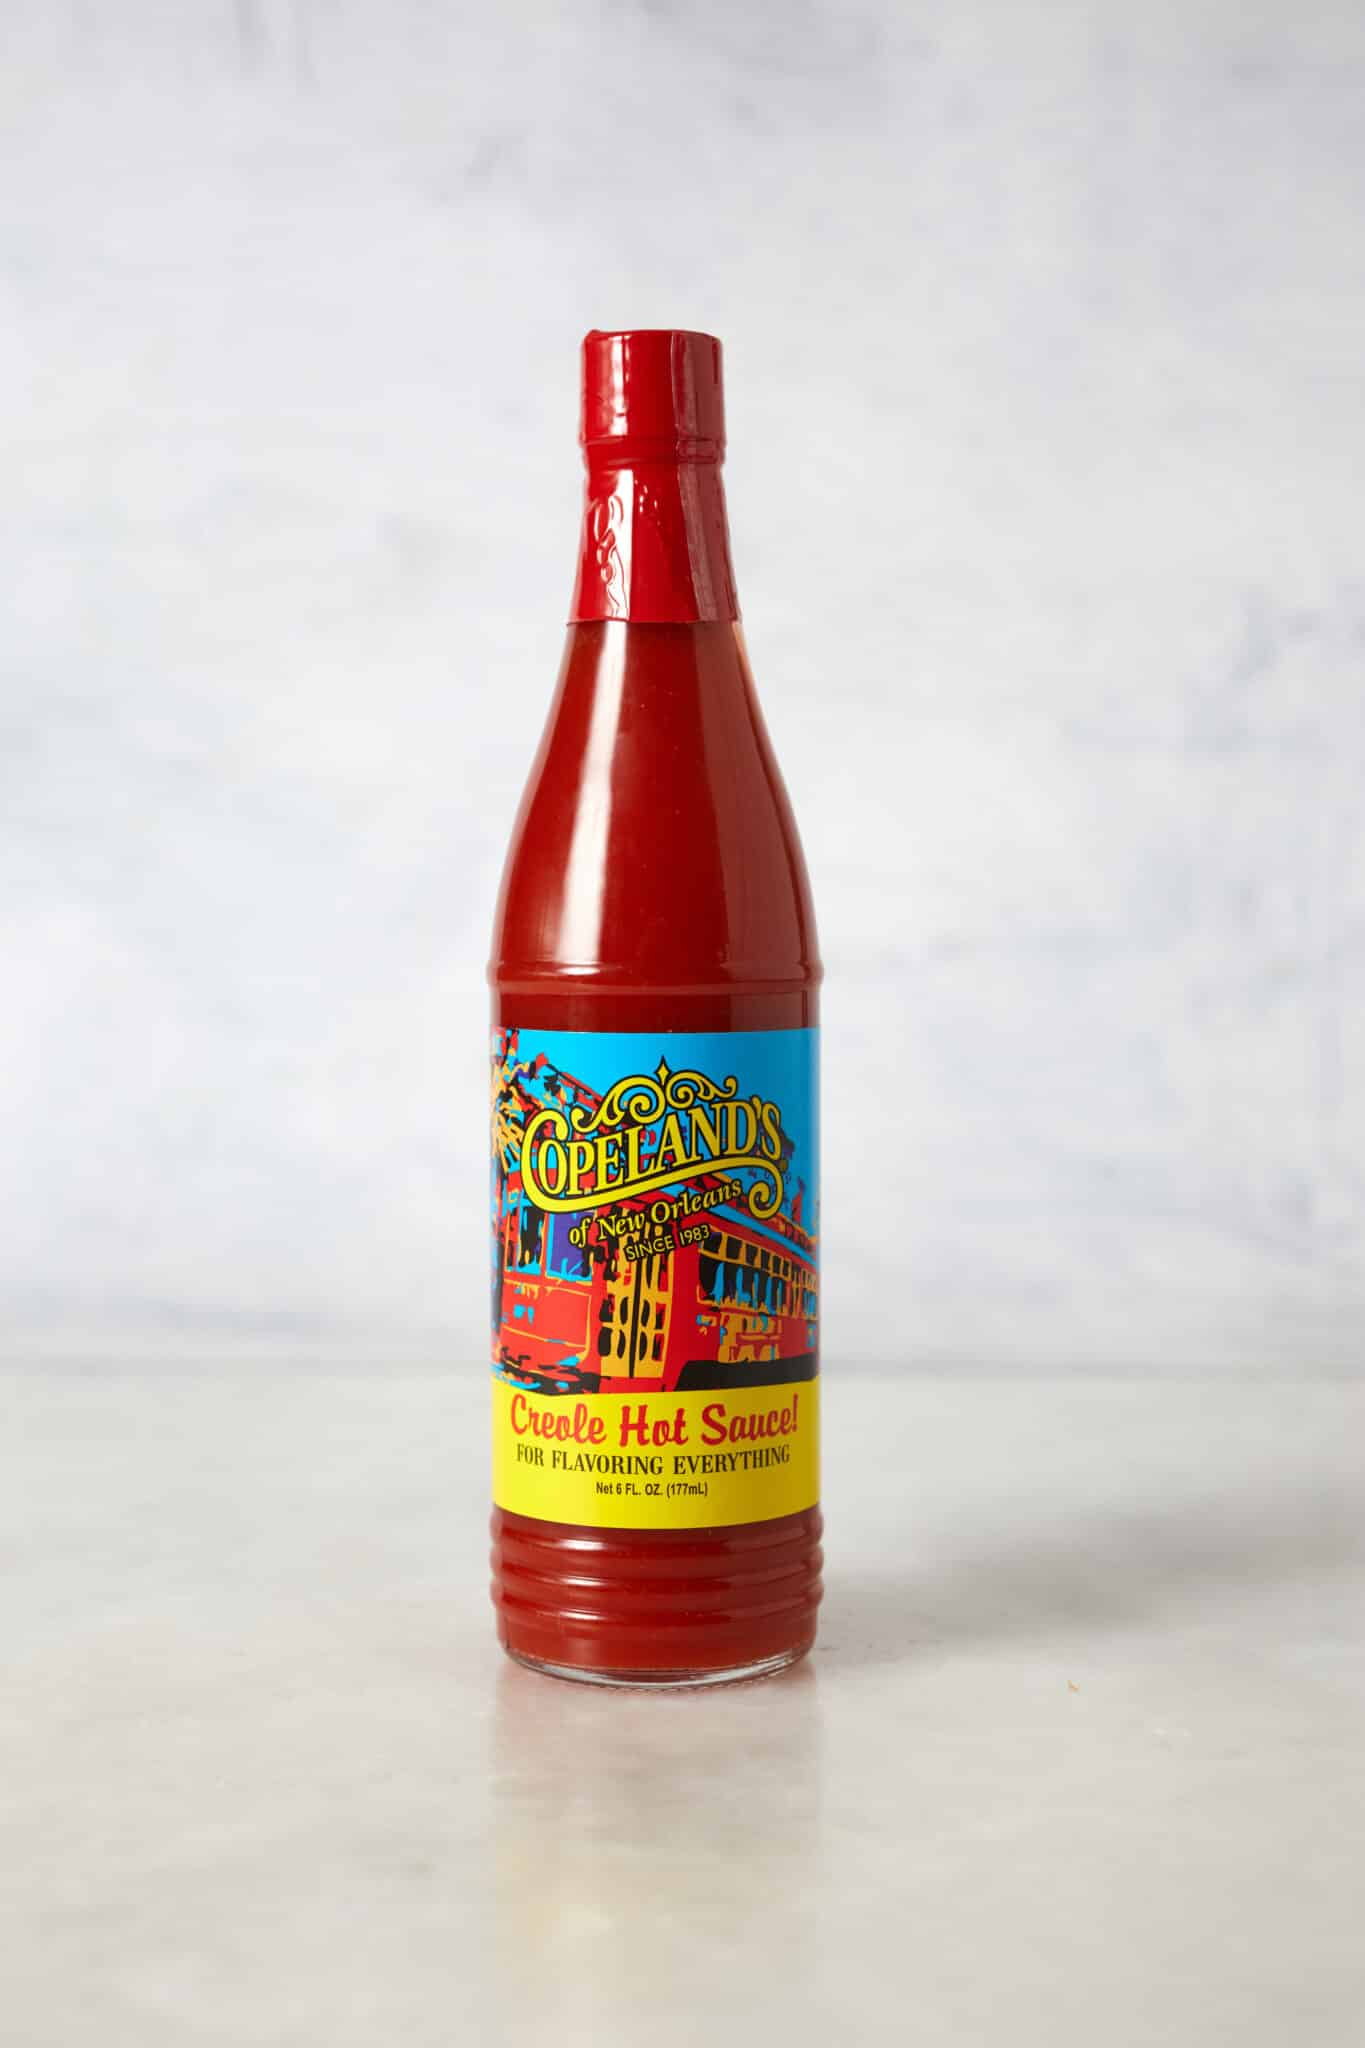 Copeland's Creole Hot Sauce